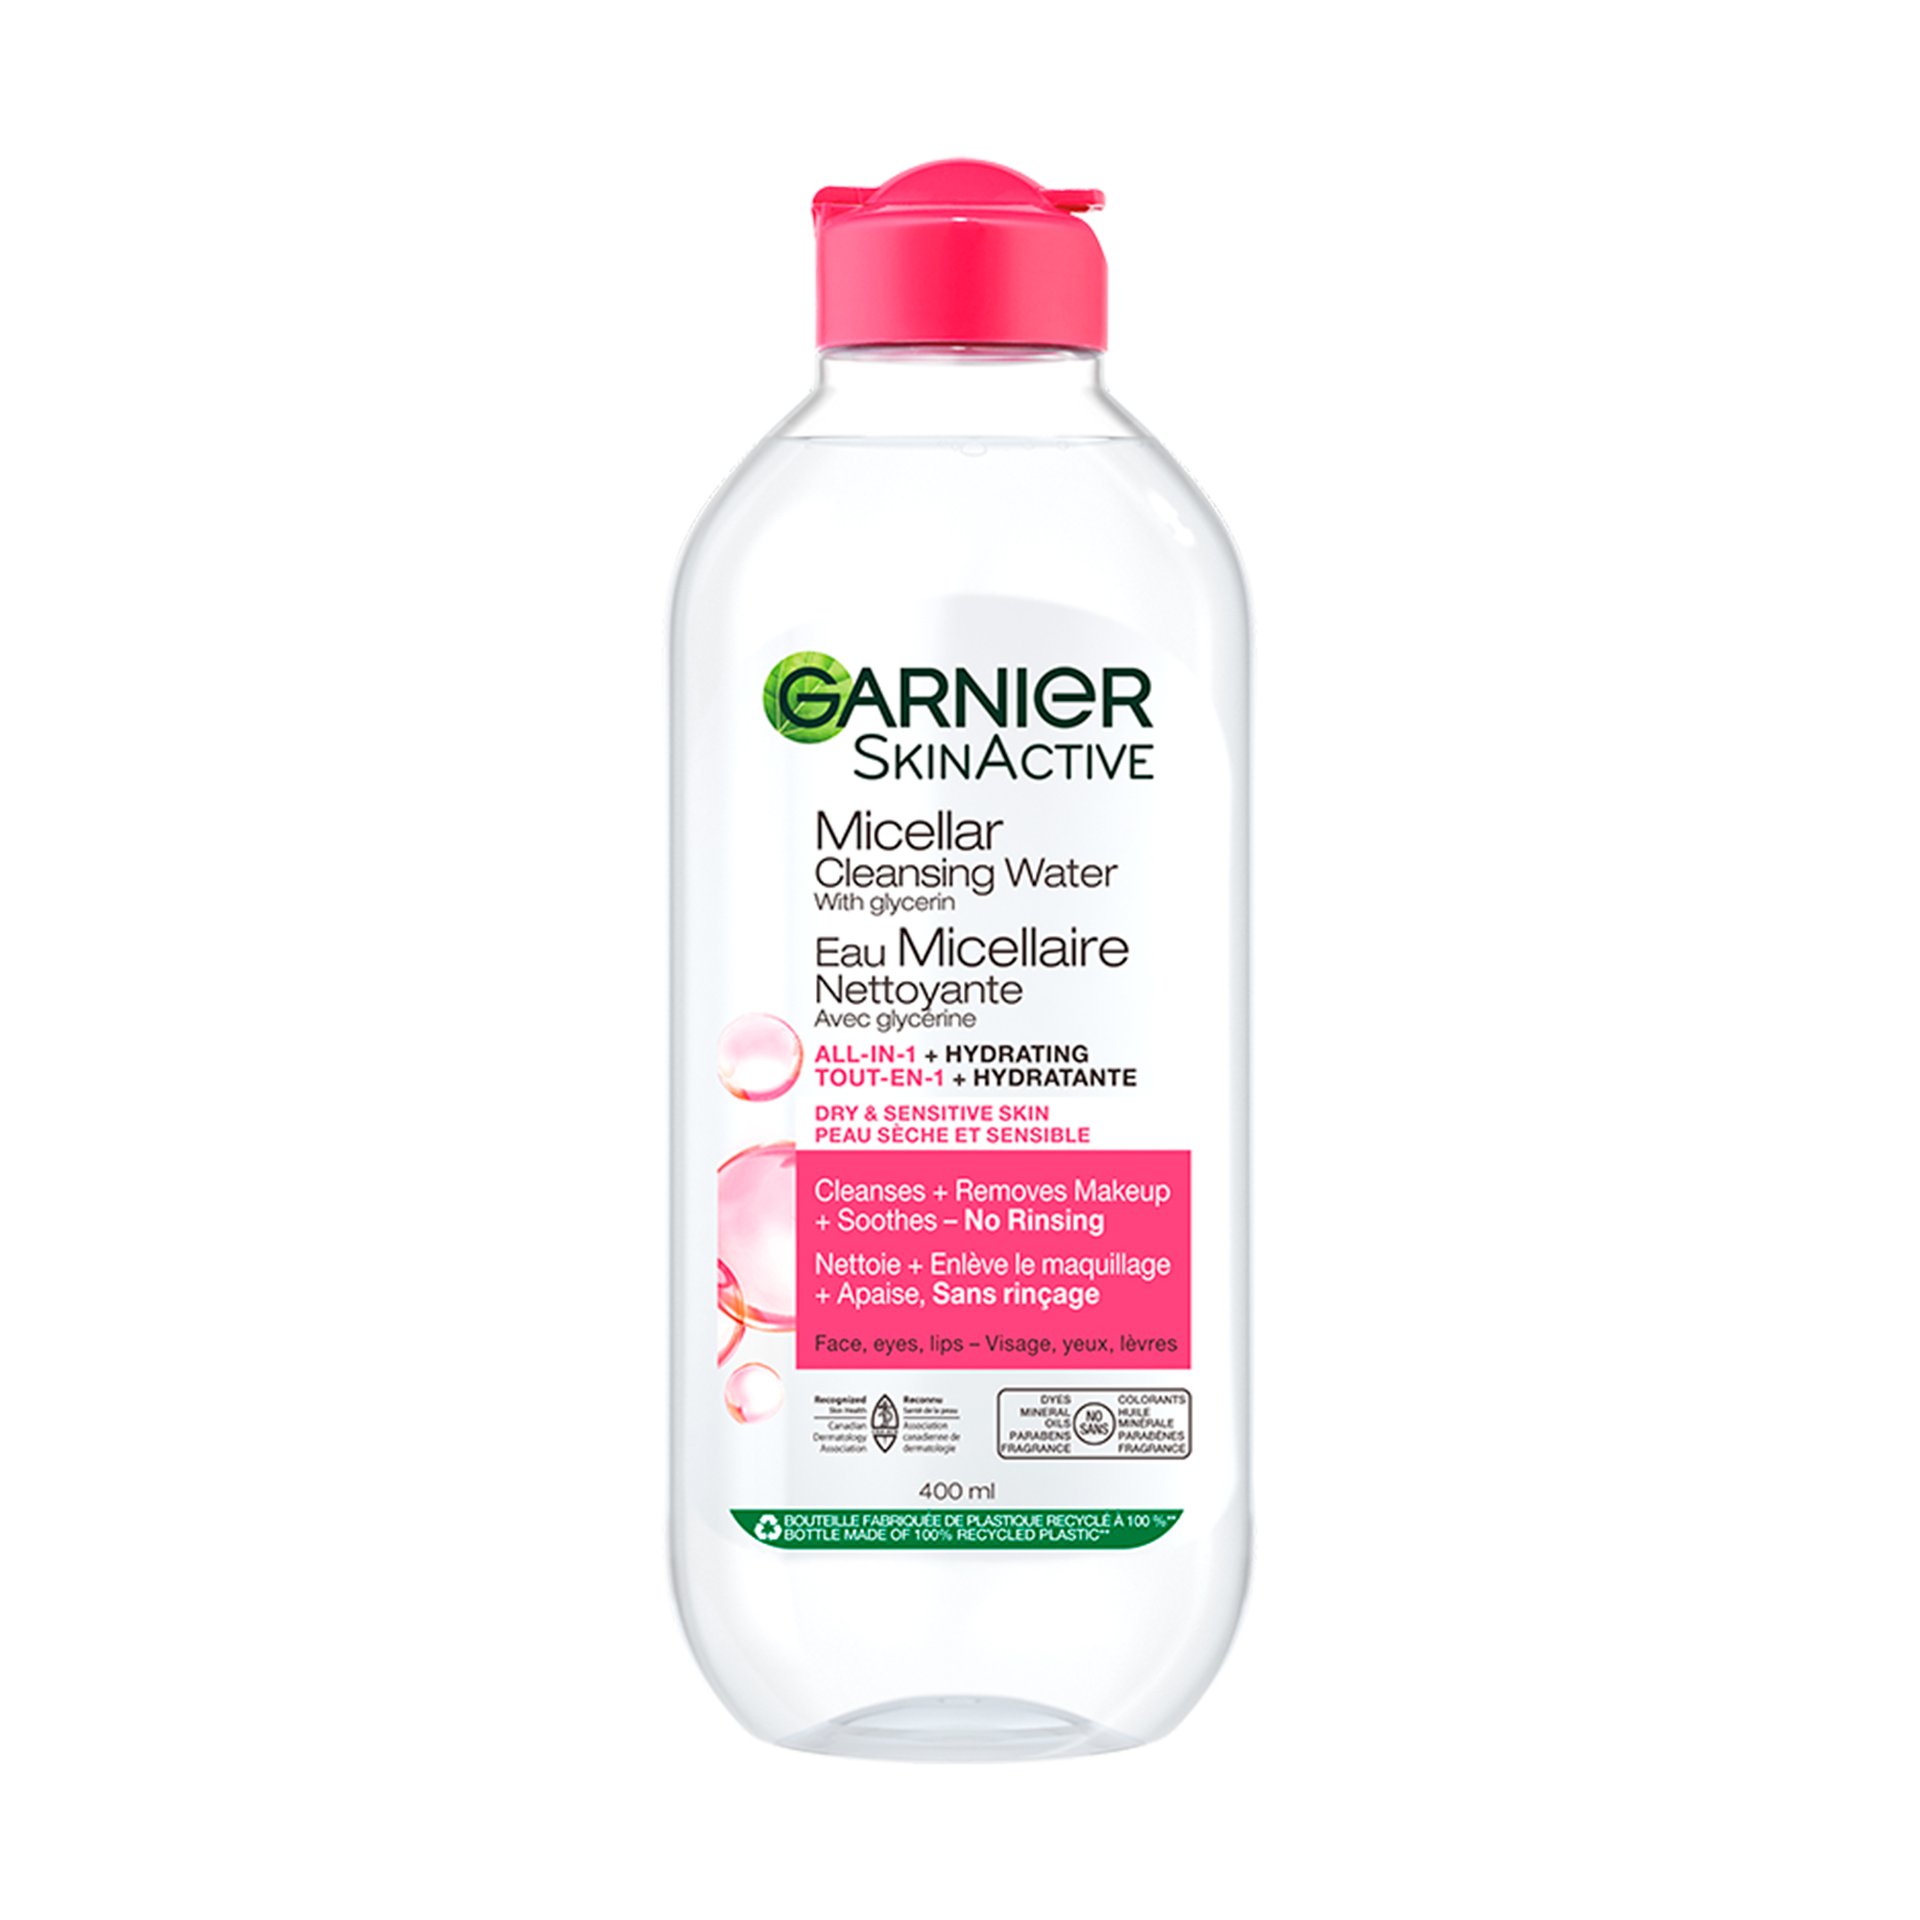 All-In-1 Micellar Water for Dry Skin - Garnier SkinActive